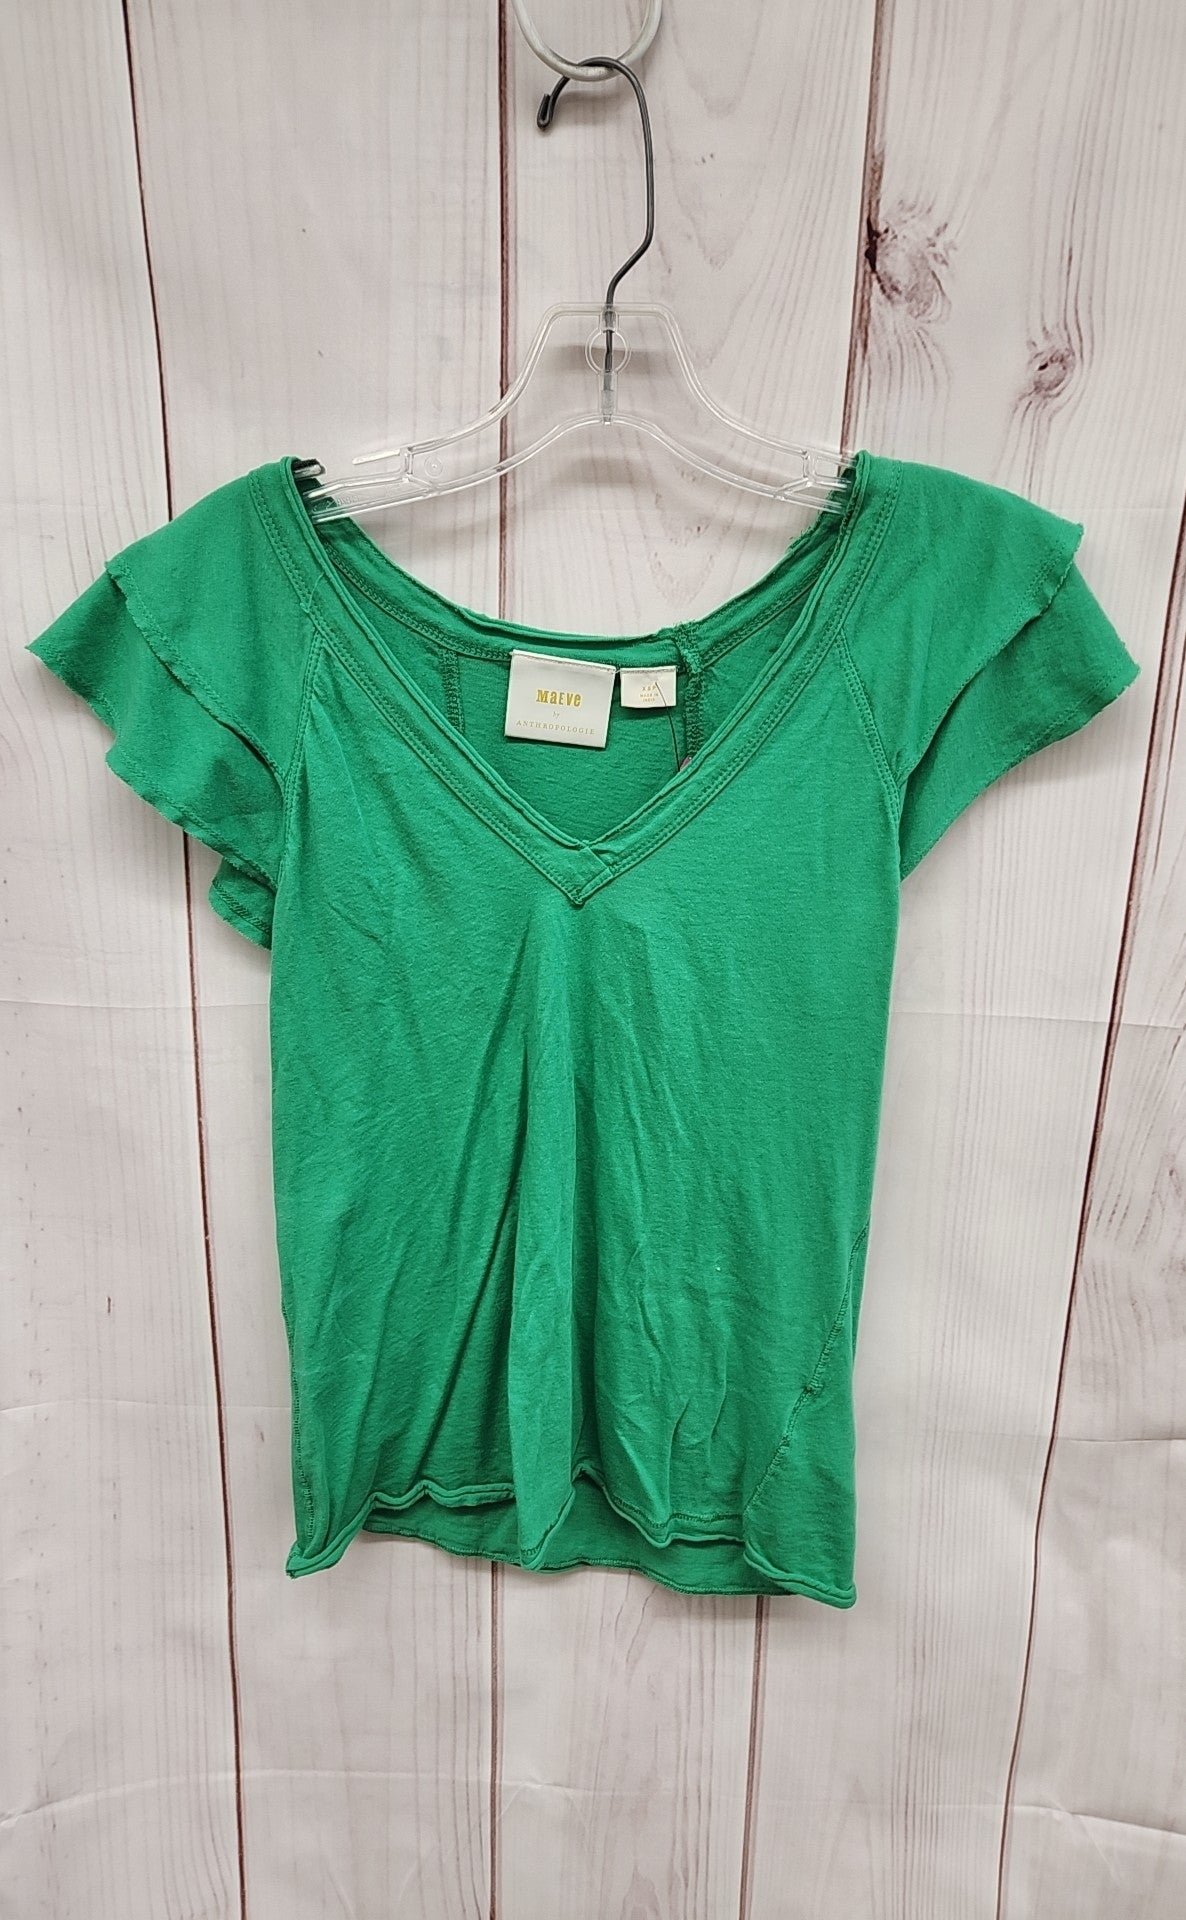 Maeve Women's Size XS Petite Green Short Sleeve Top